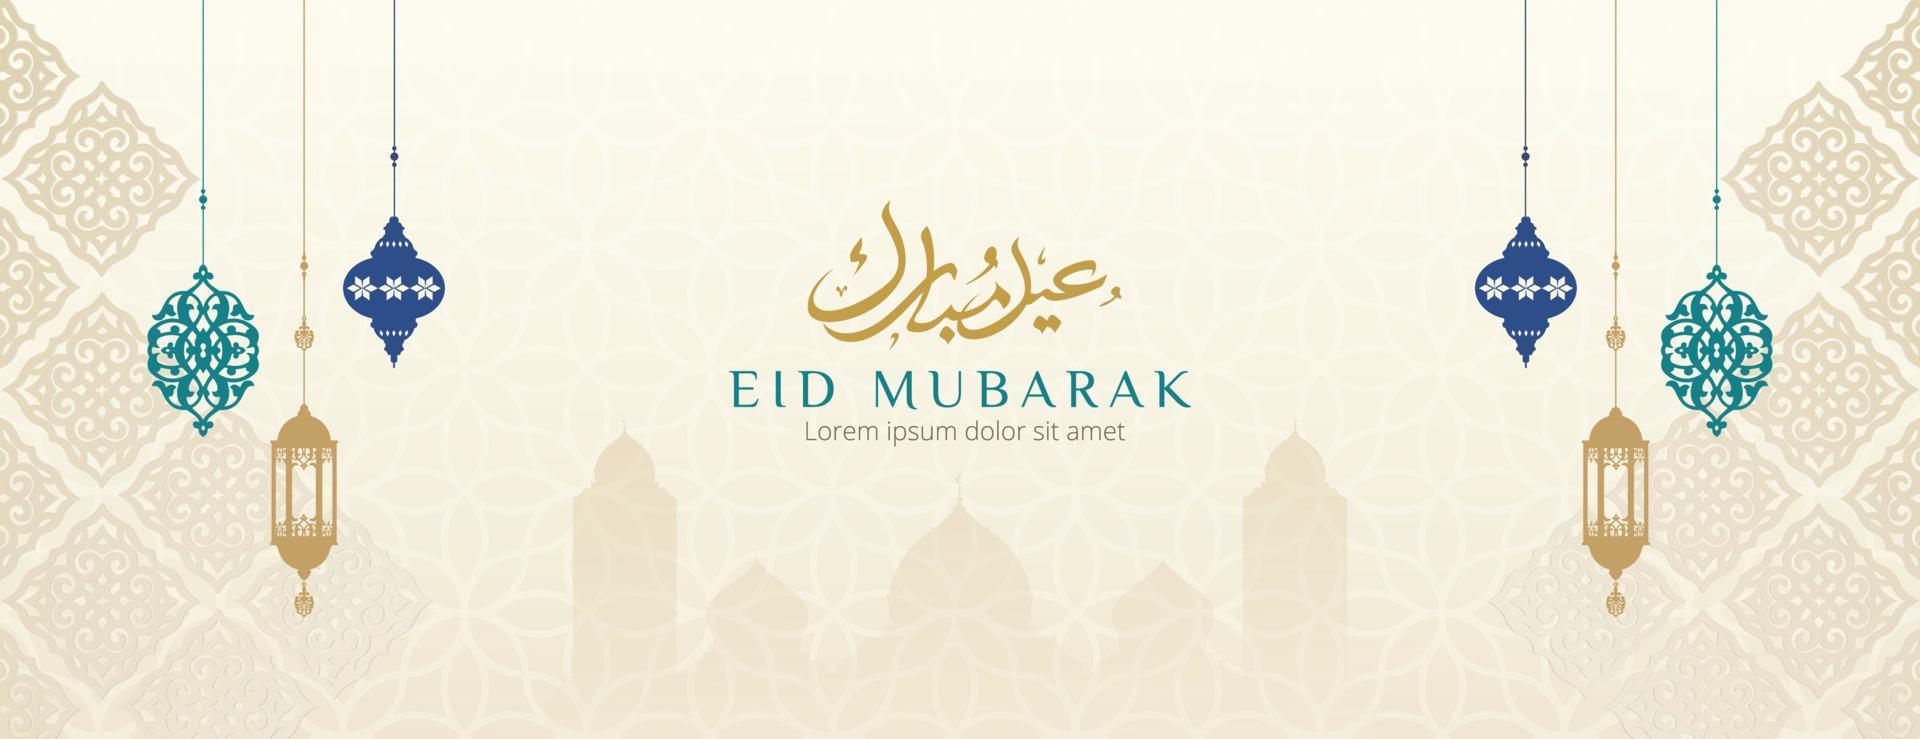 Eid mubarak banner design template vector